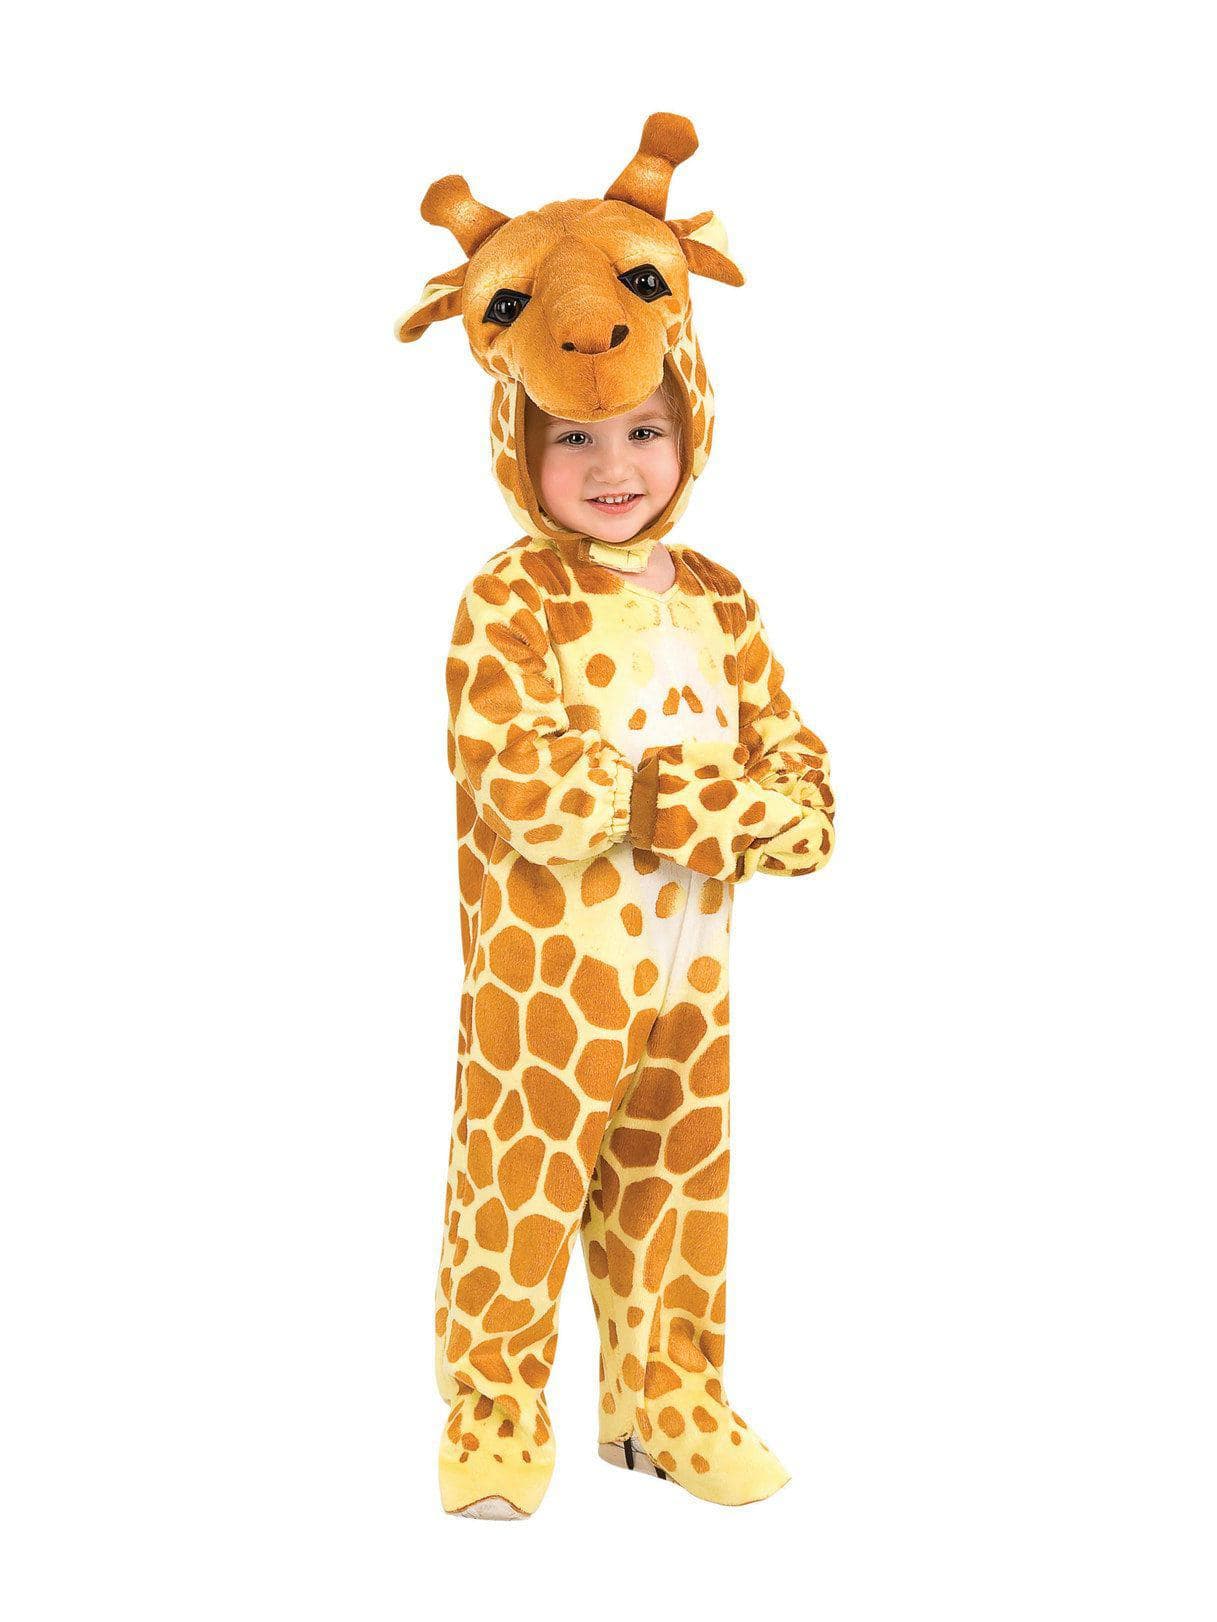 Baby/Toddler Silly Safari Giraffe Costume - costumes.com